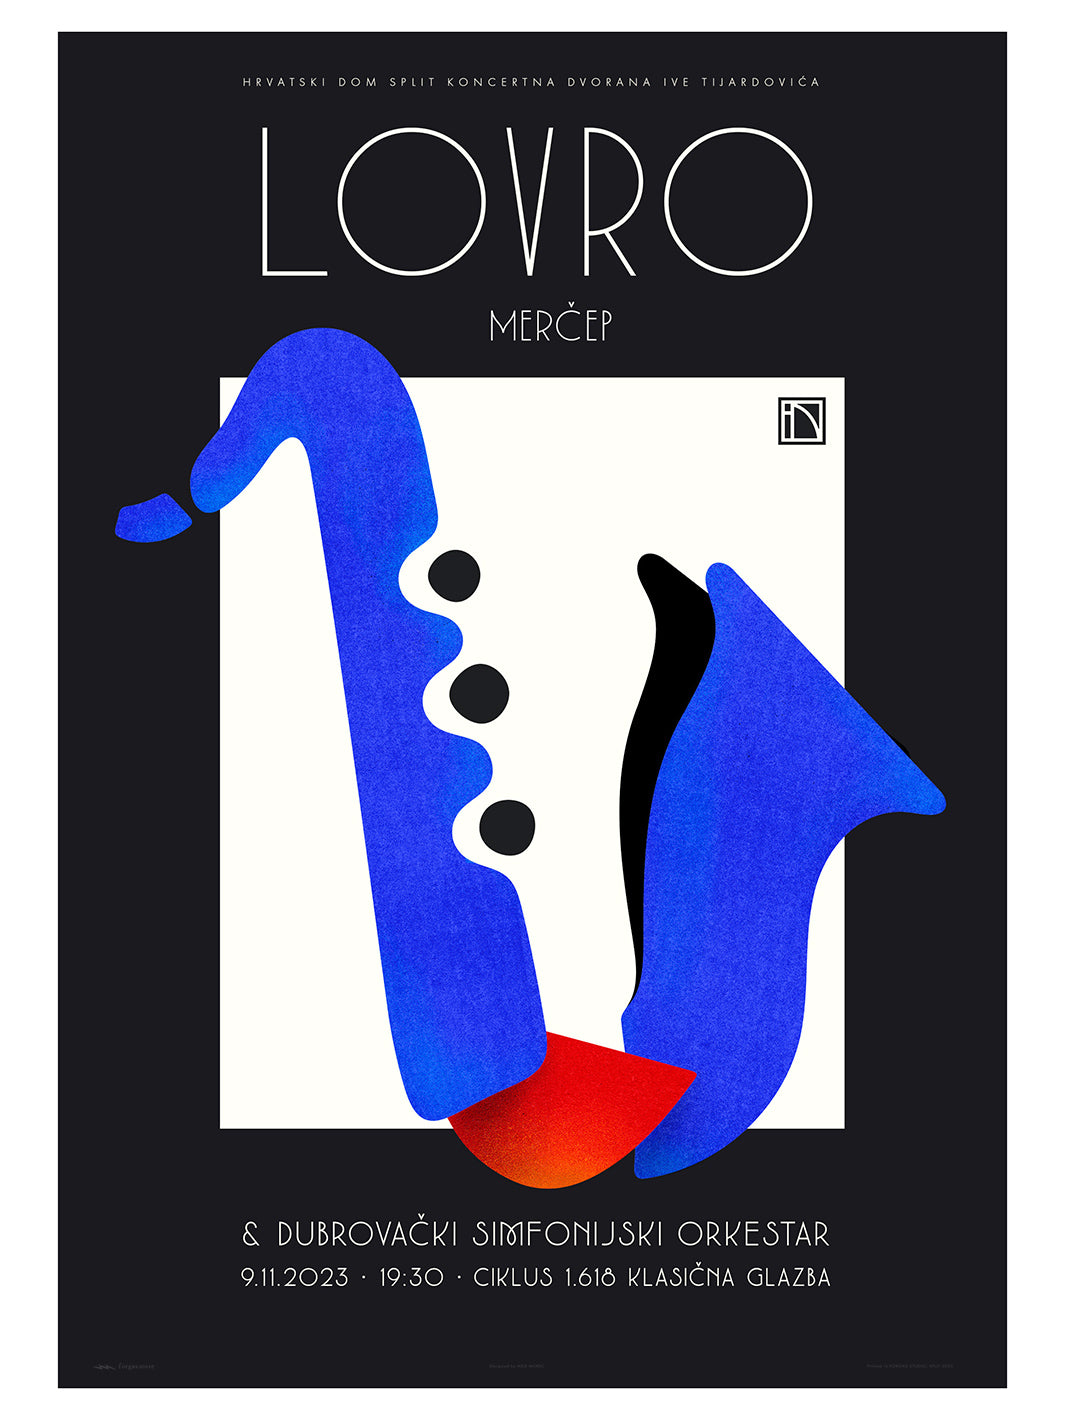 Lovro Mercep & Dubrovnik Symphony Orchestra